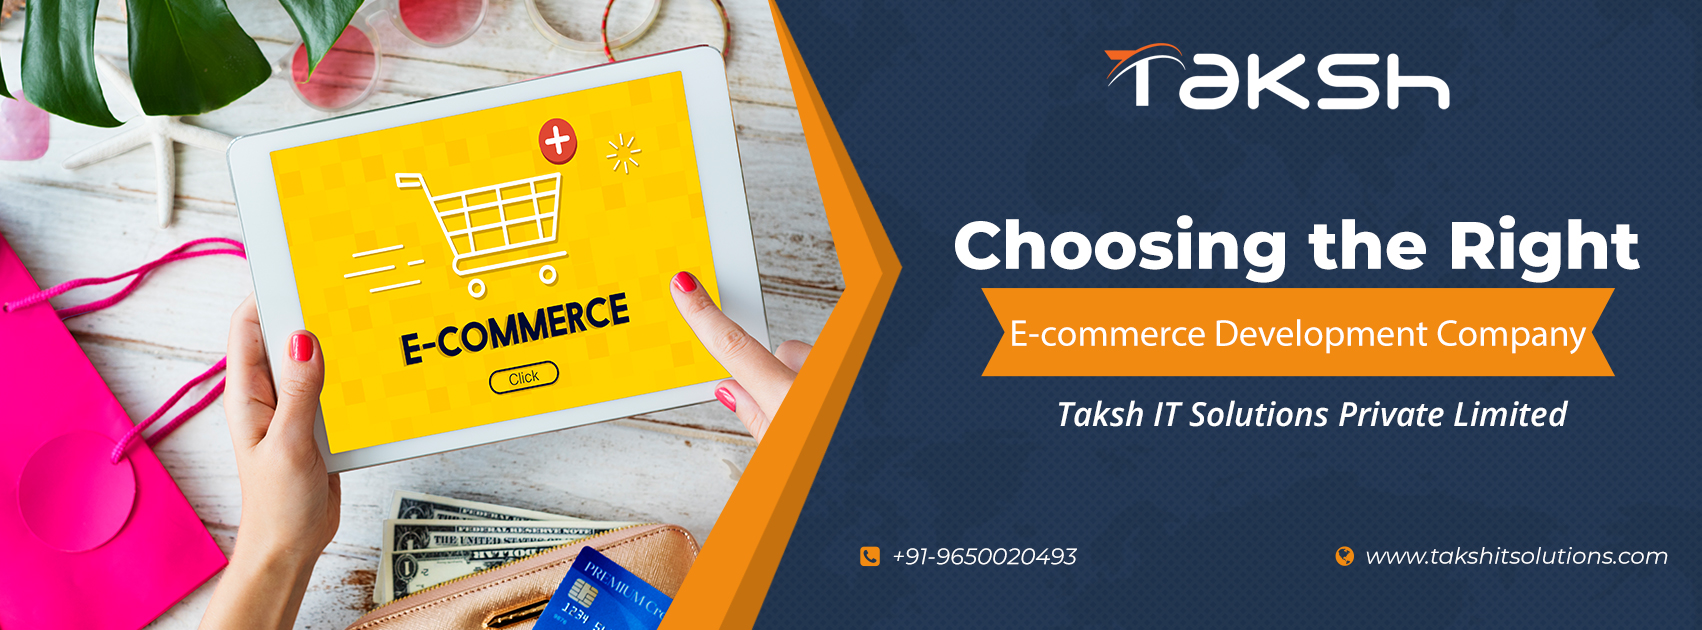 Choosing the Right E-commerce Development Company: Taksh IT Solutions